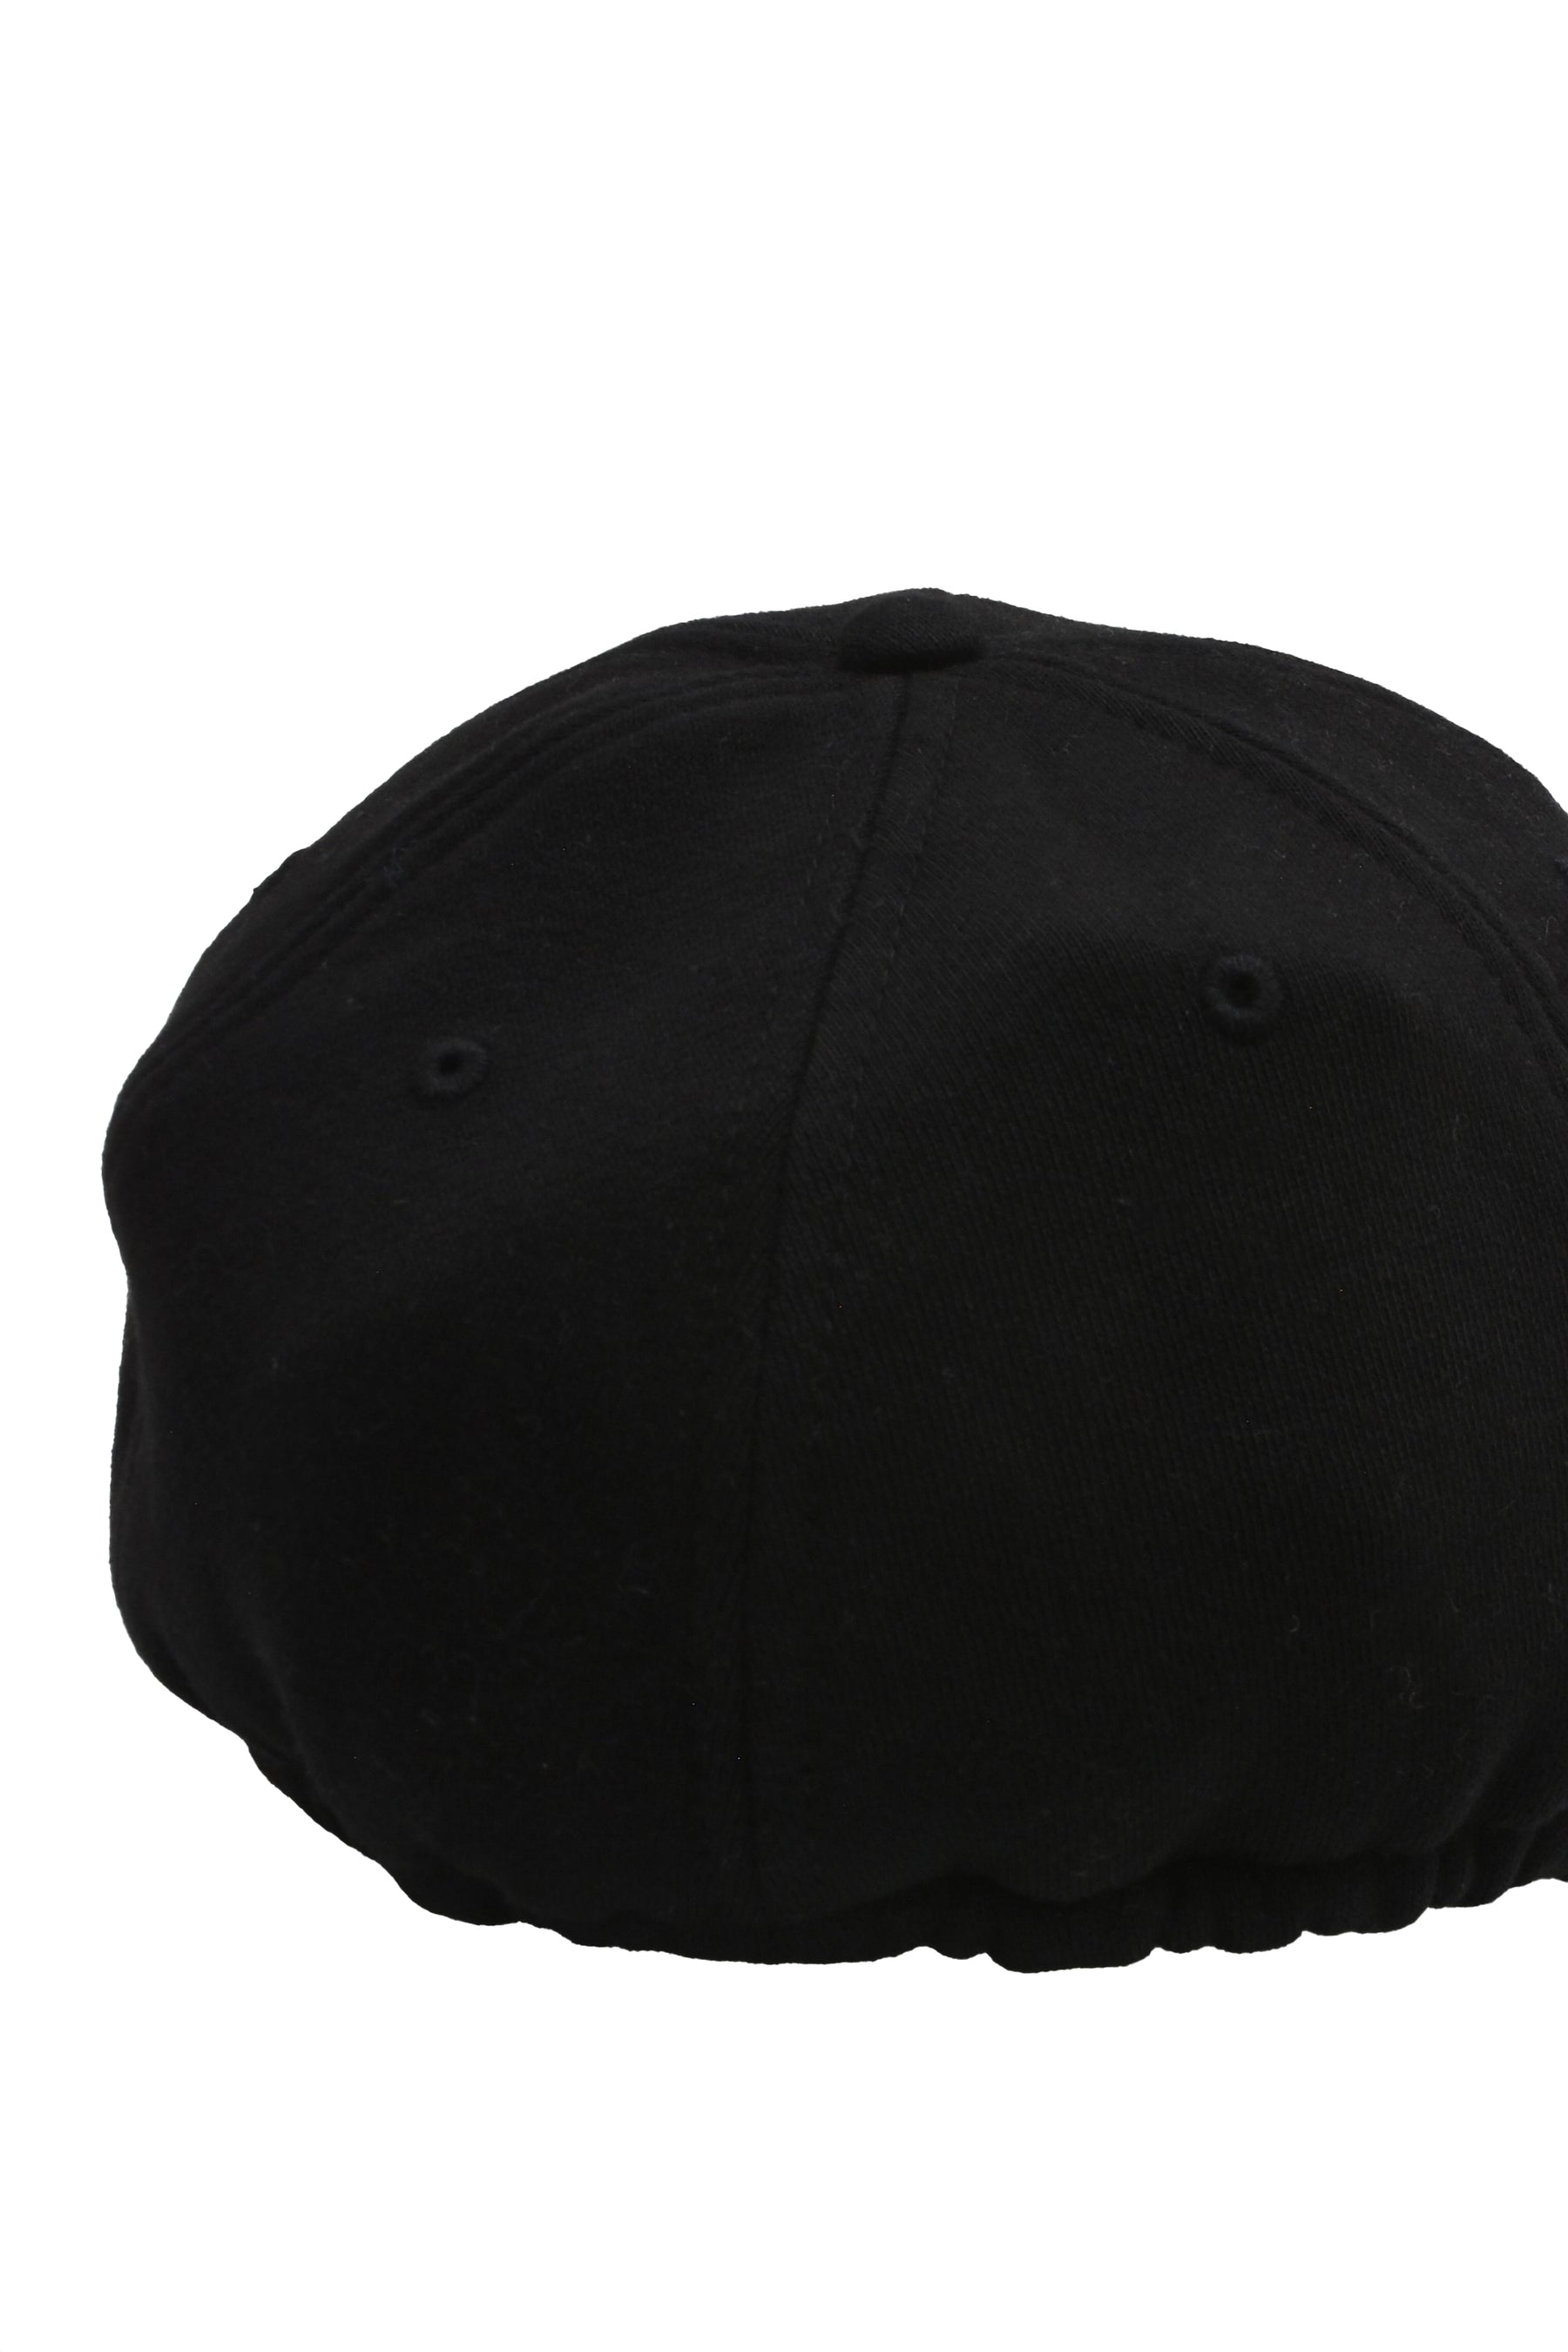 BASEBALL CAP / JET BLACK